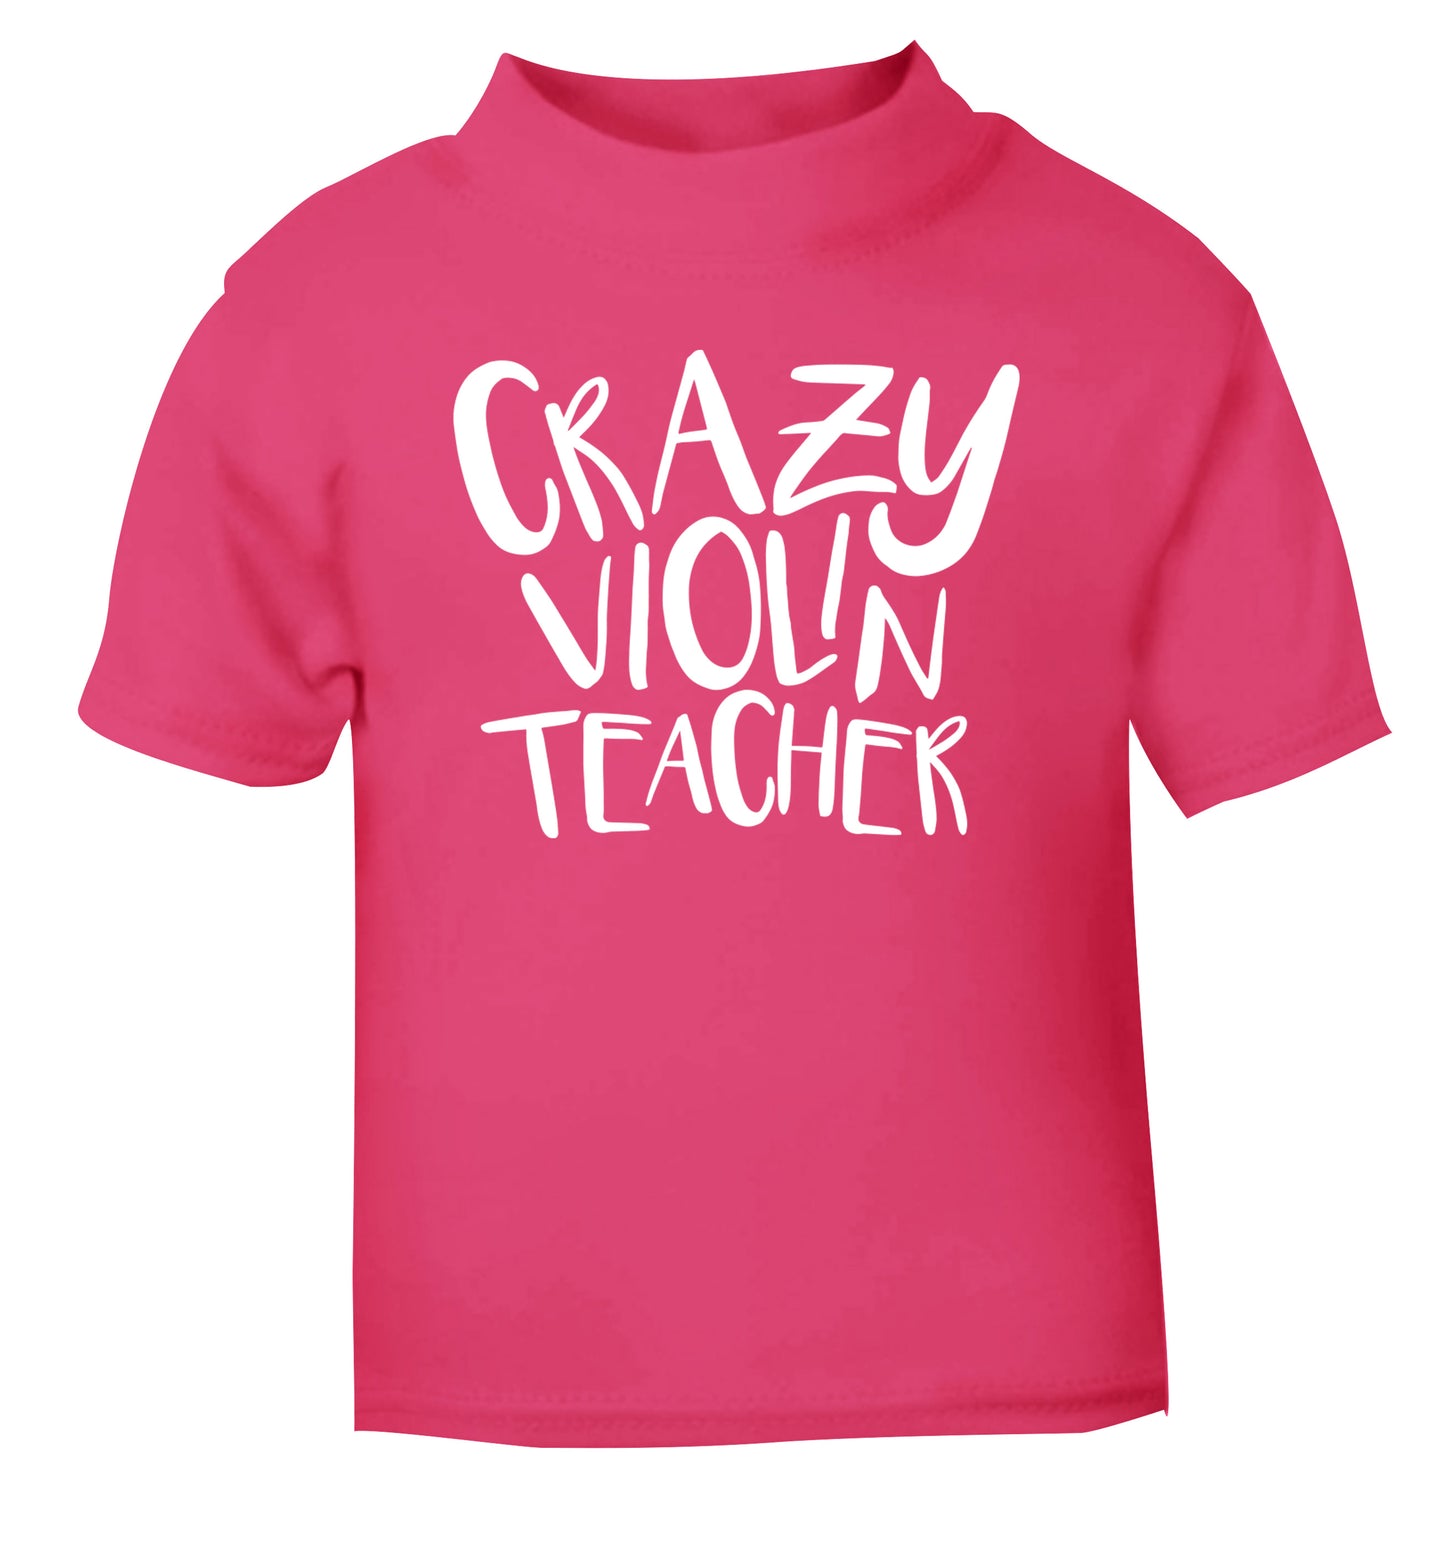 Crazy violin teacher pink Baby Toddler Tshirt 2 Years